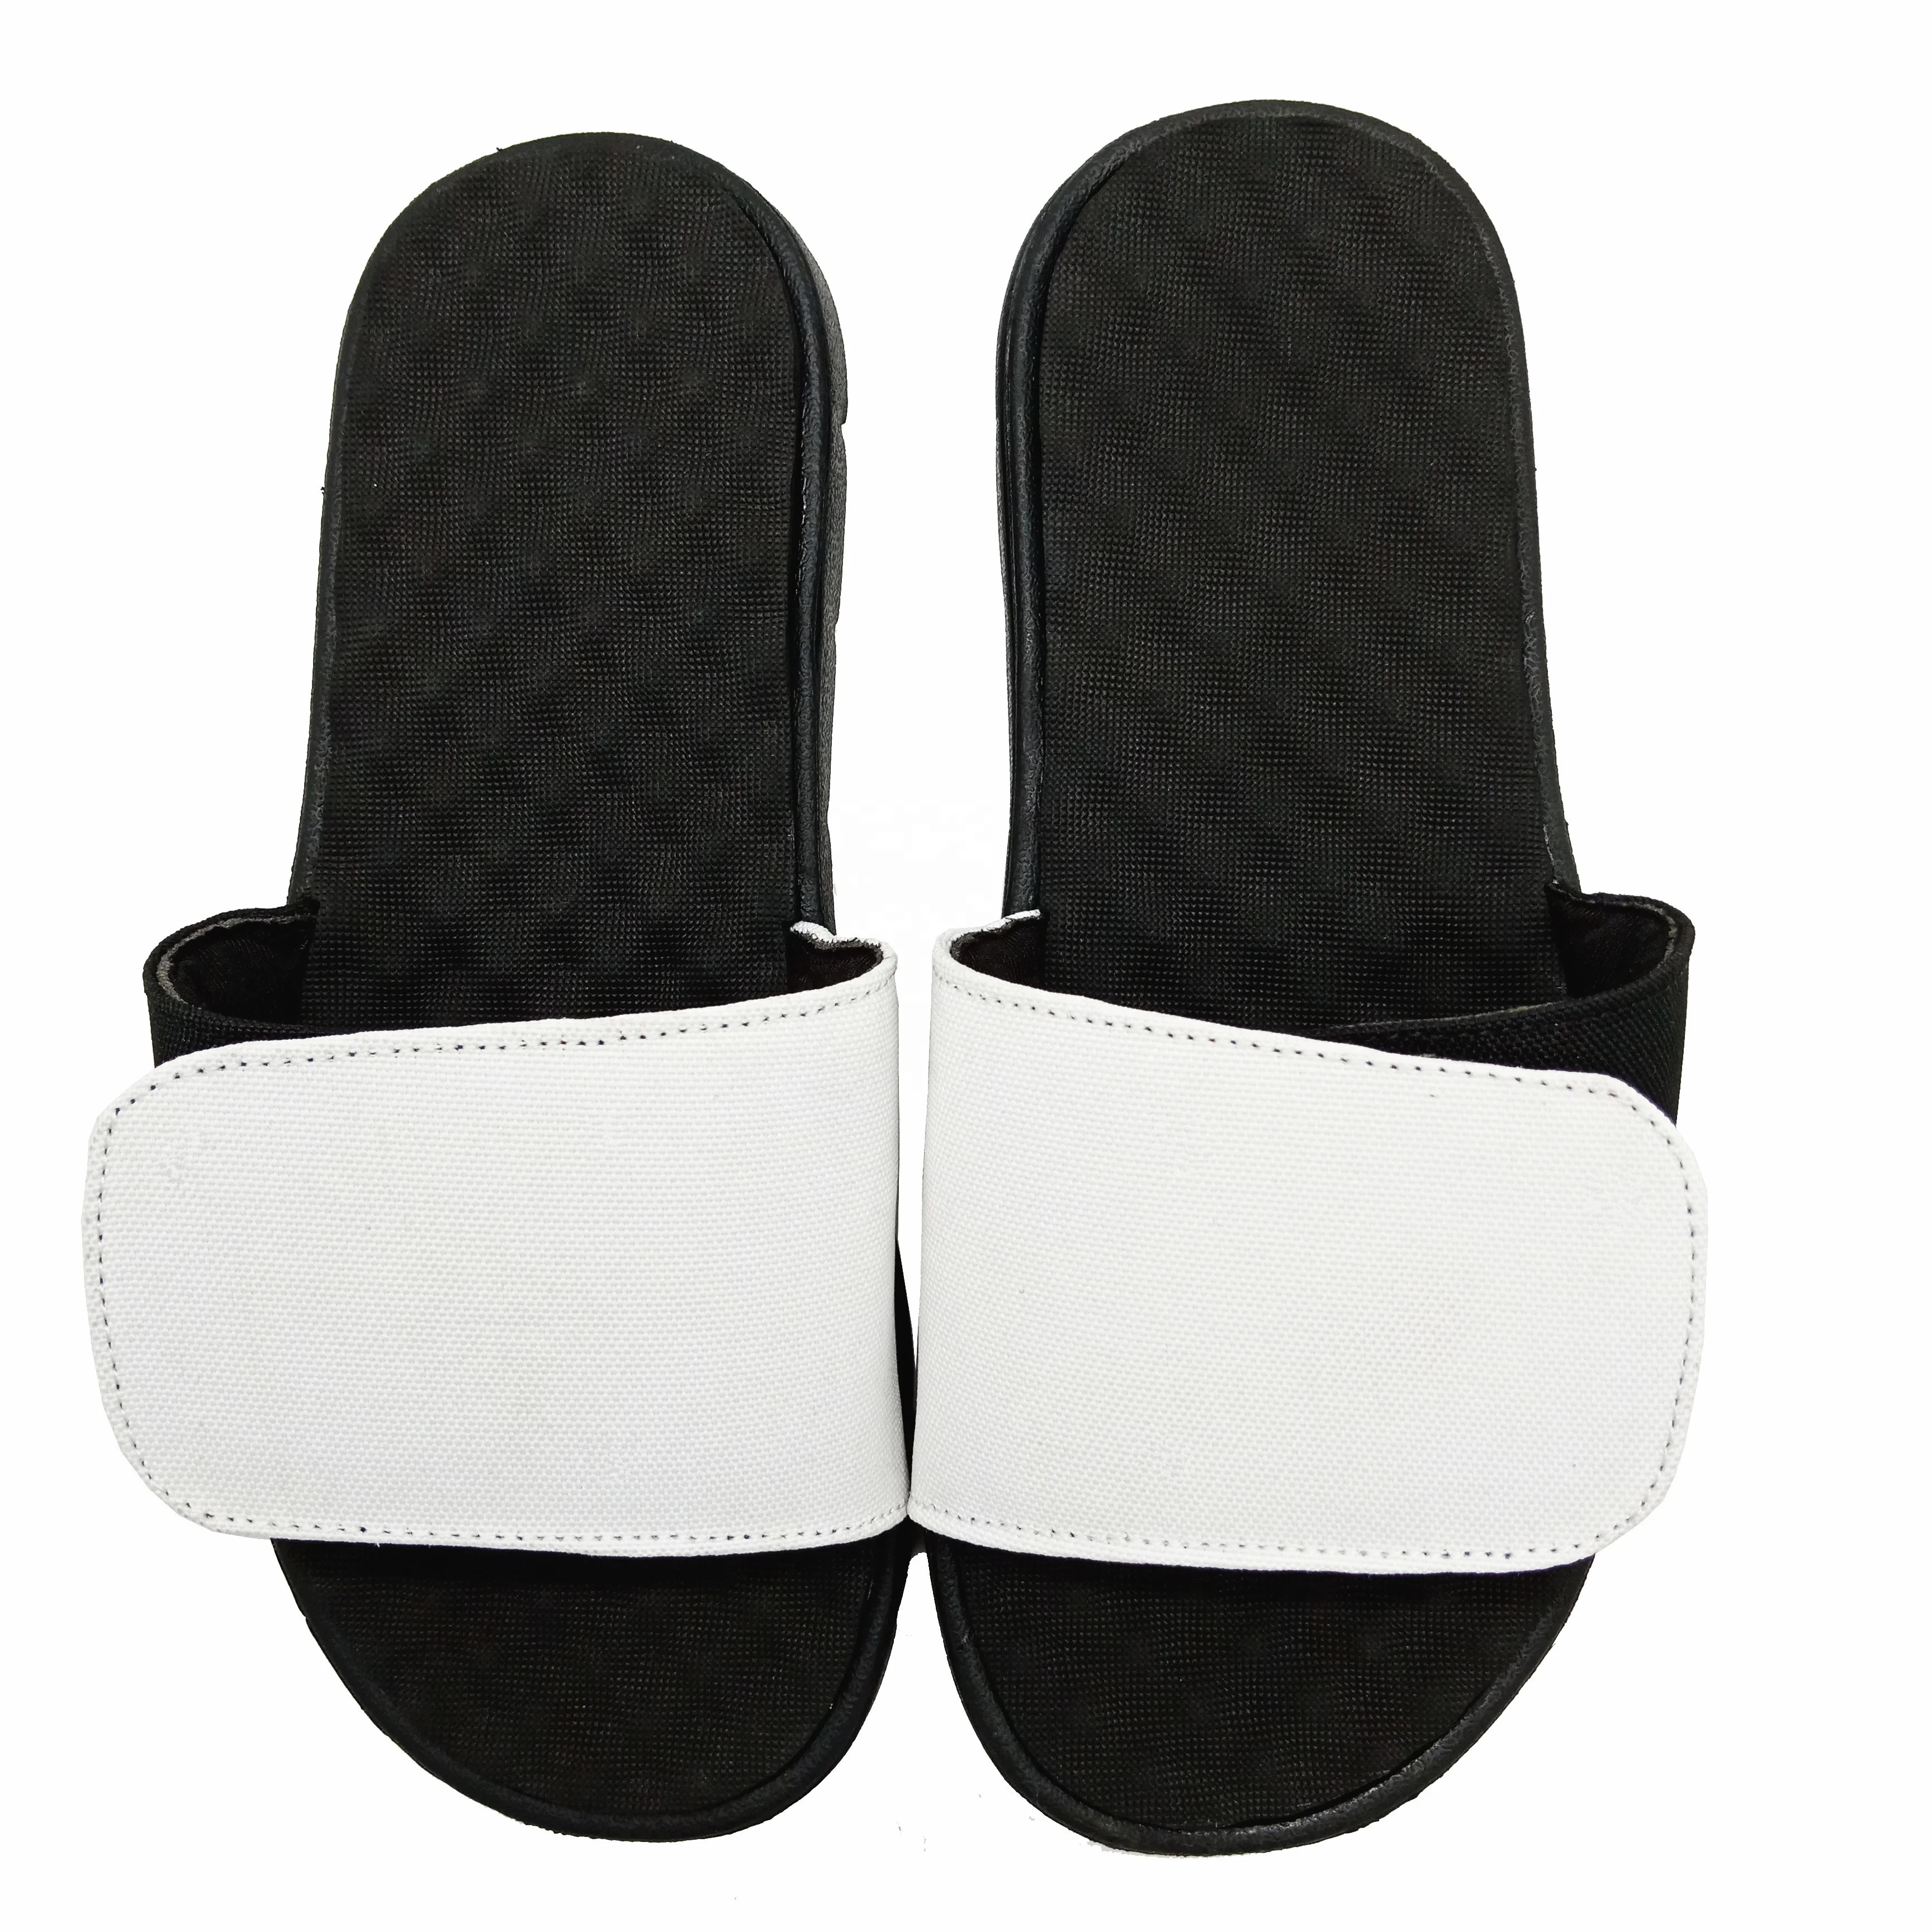 blank slide sandals